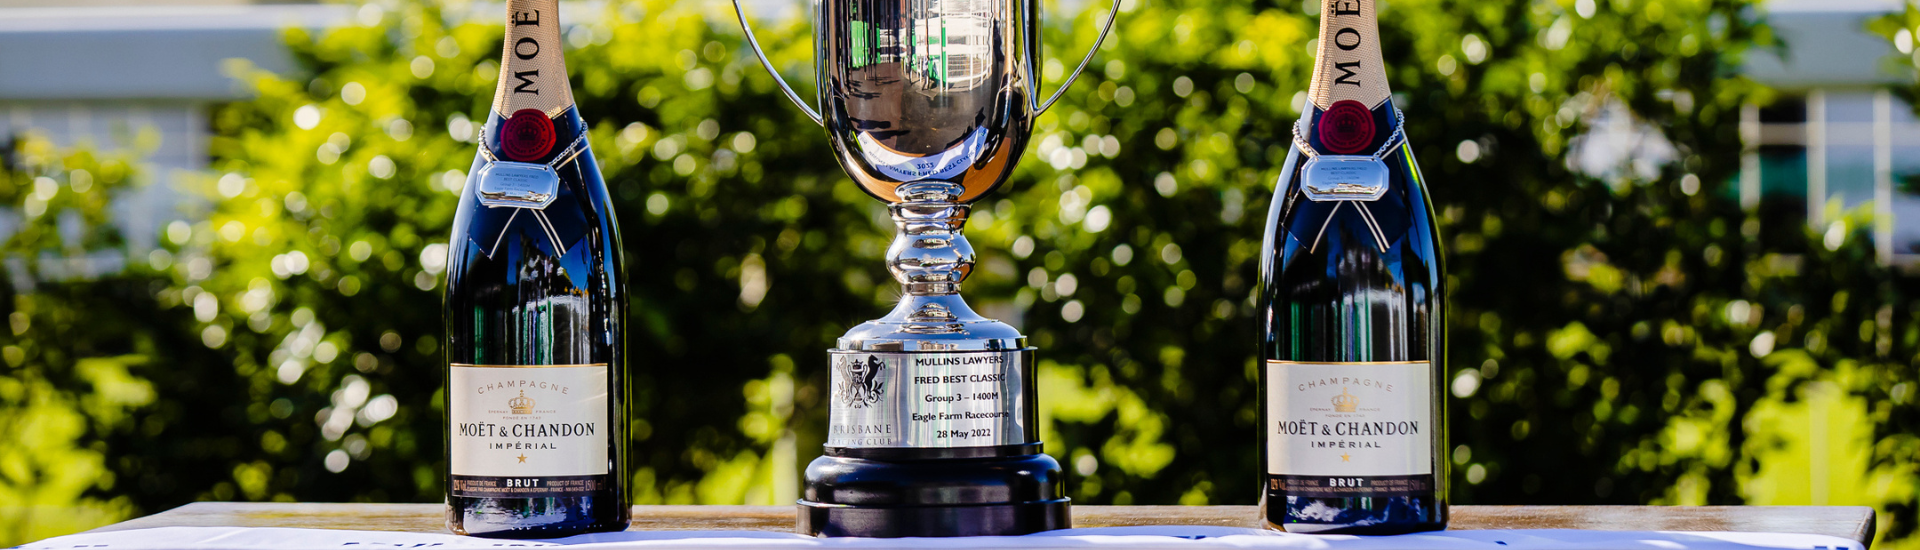 wednesday-wrap-up-doomben-26-june-2022-web-banner-fred-best-trophy | Brisbane Racing Club